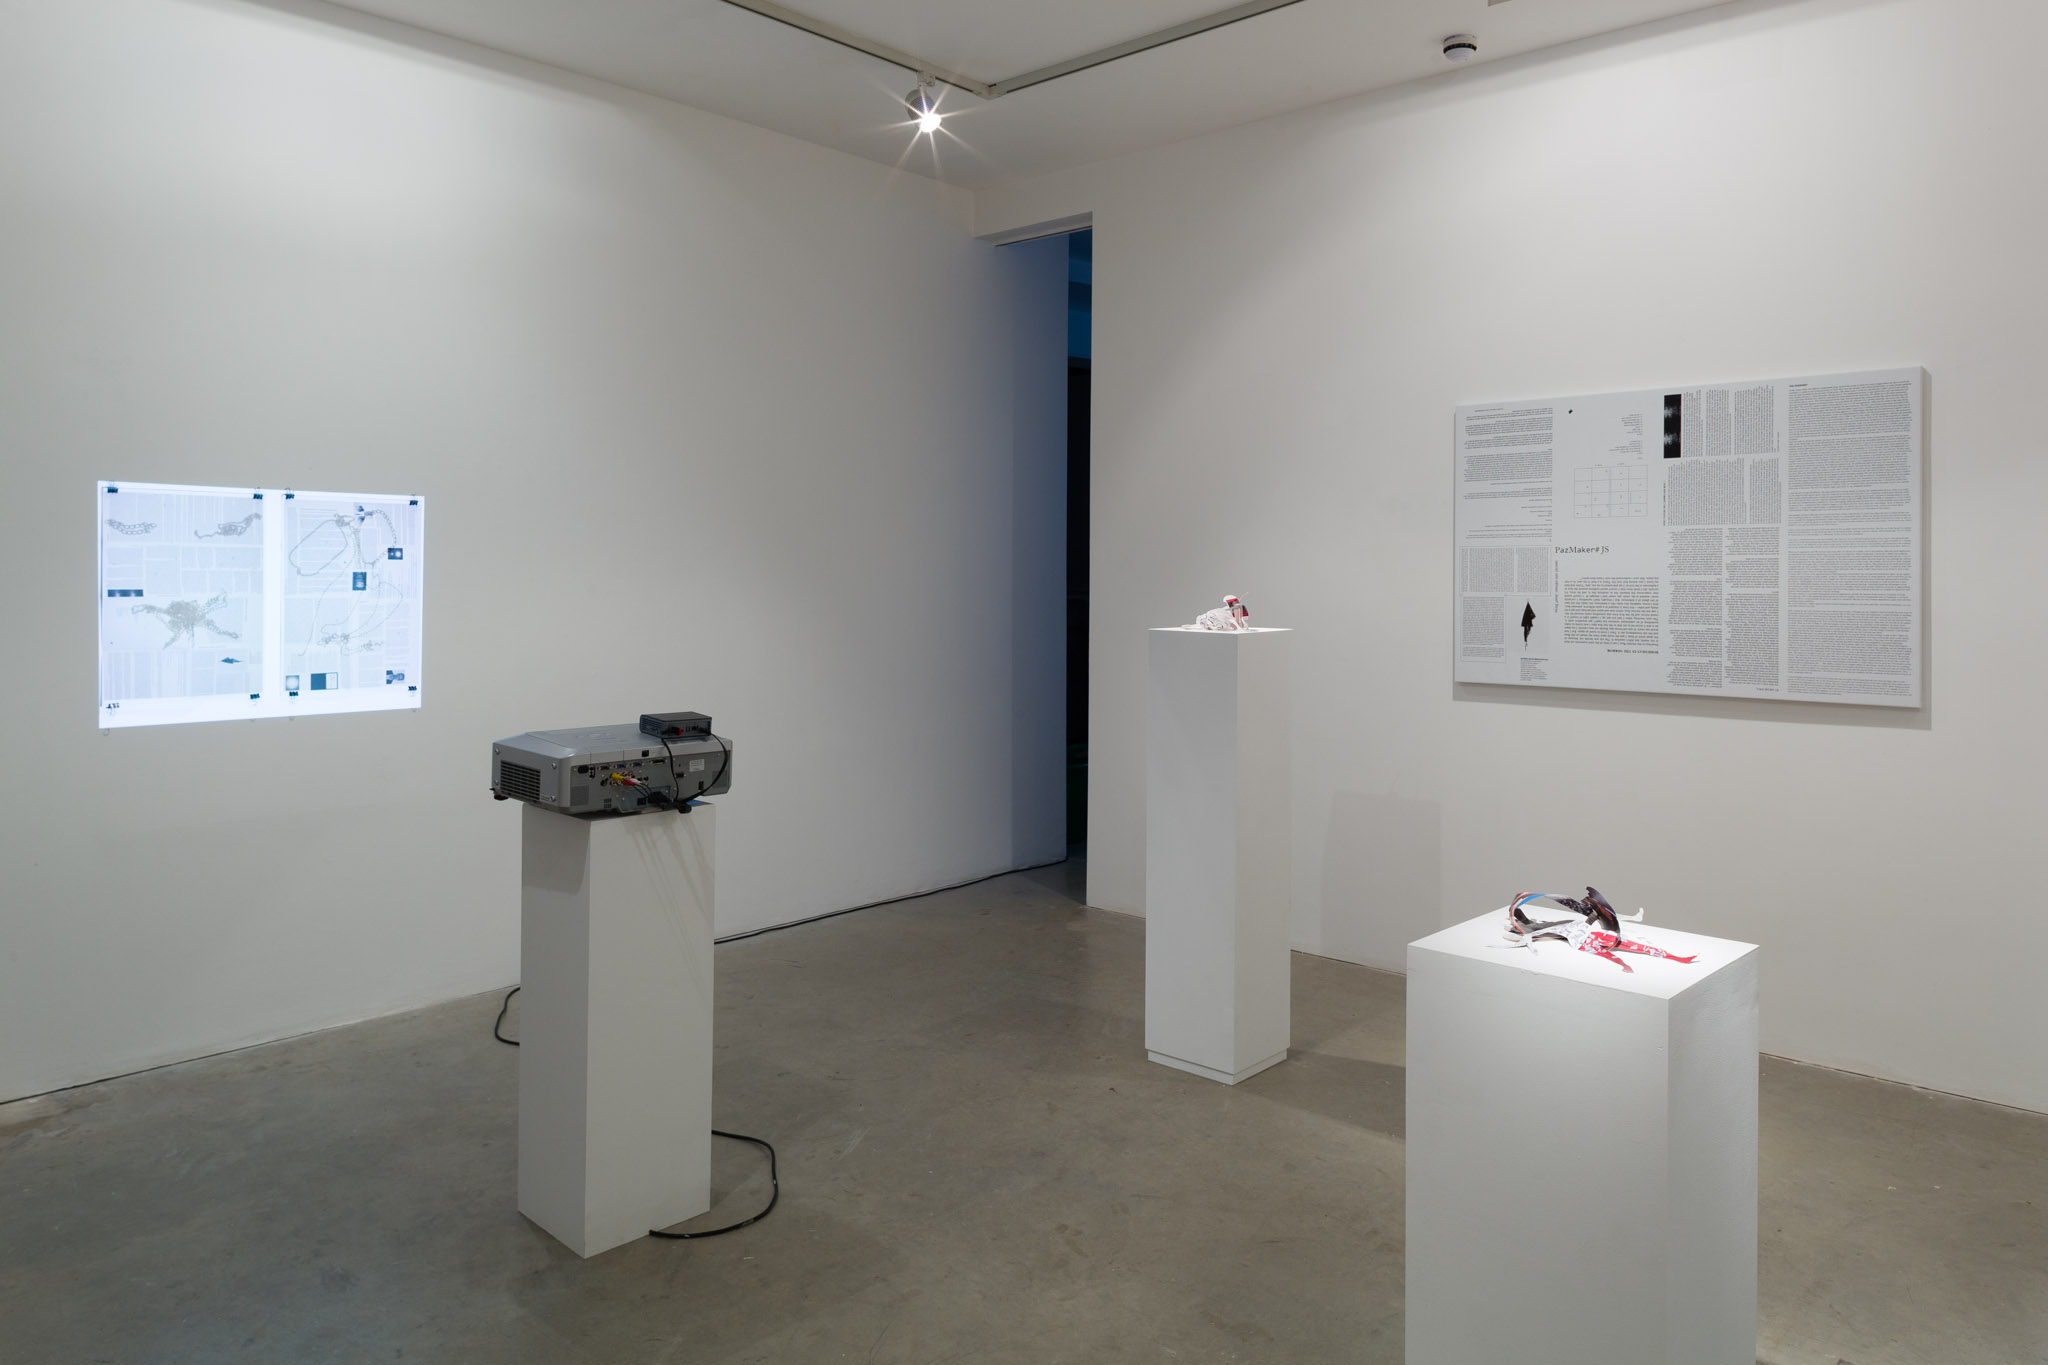 Exhibition view. Adriana Lara, Josef Strau & Perros Negros